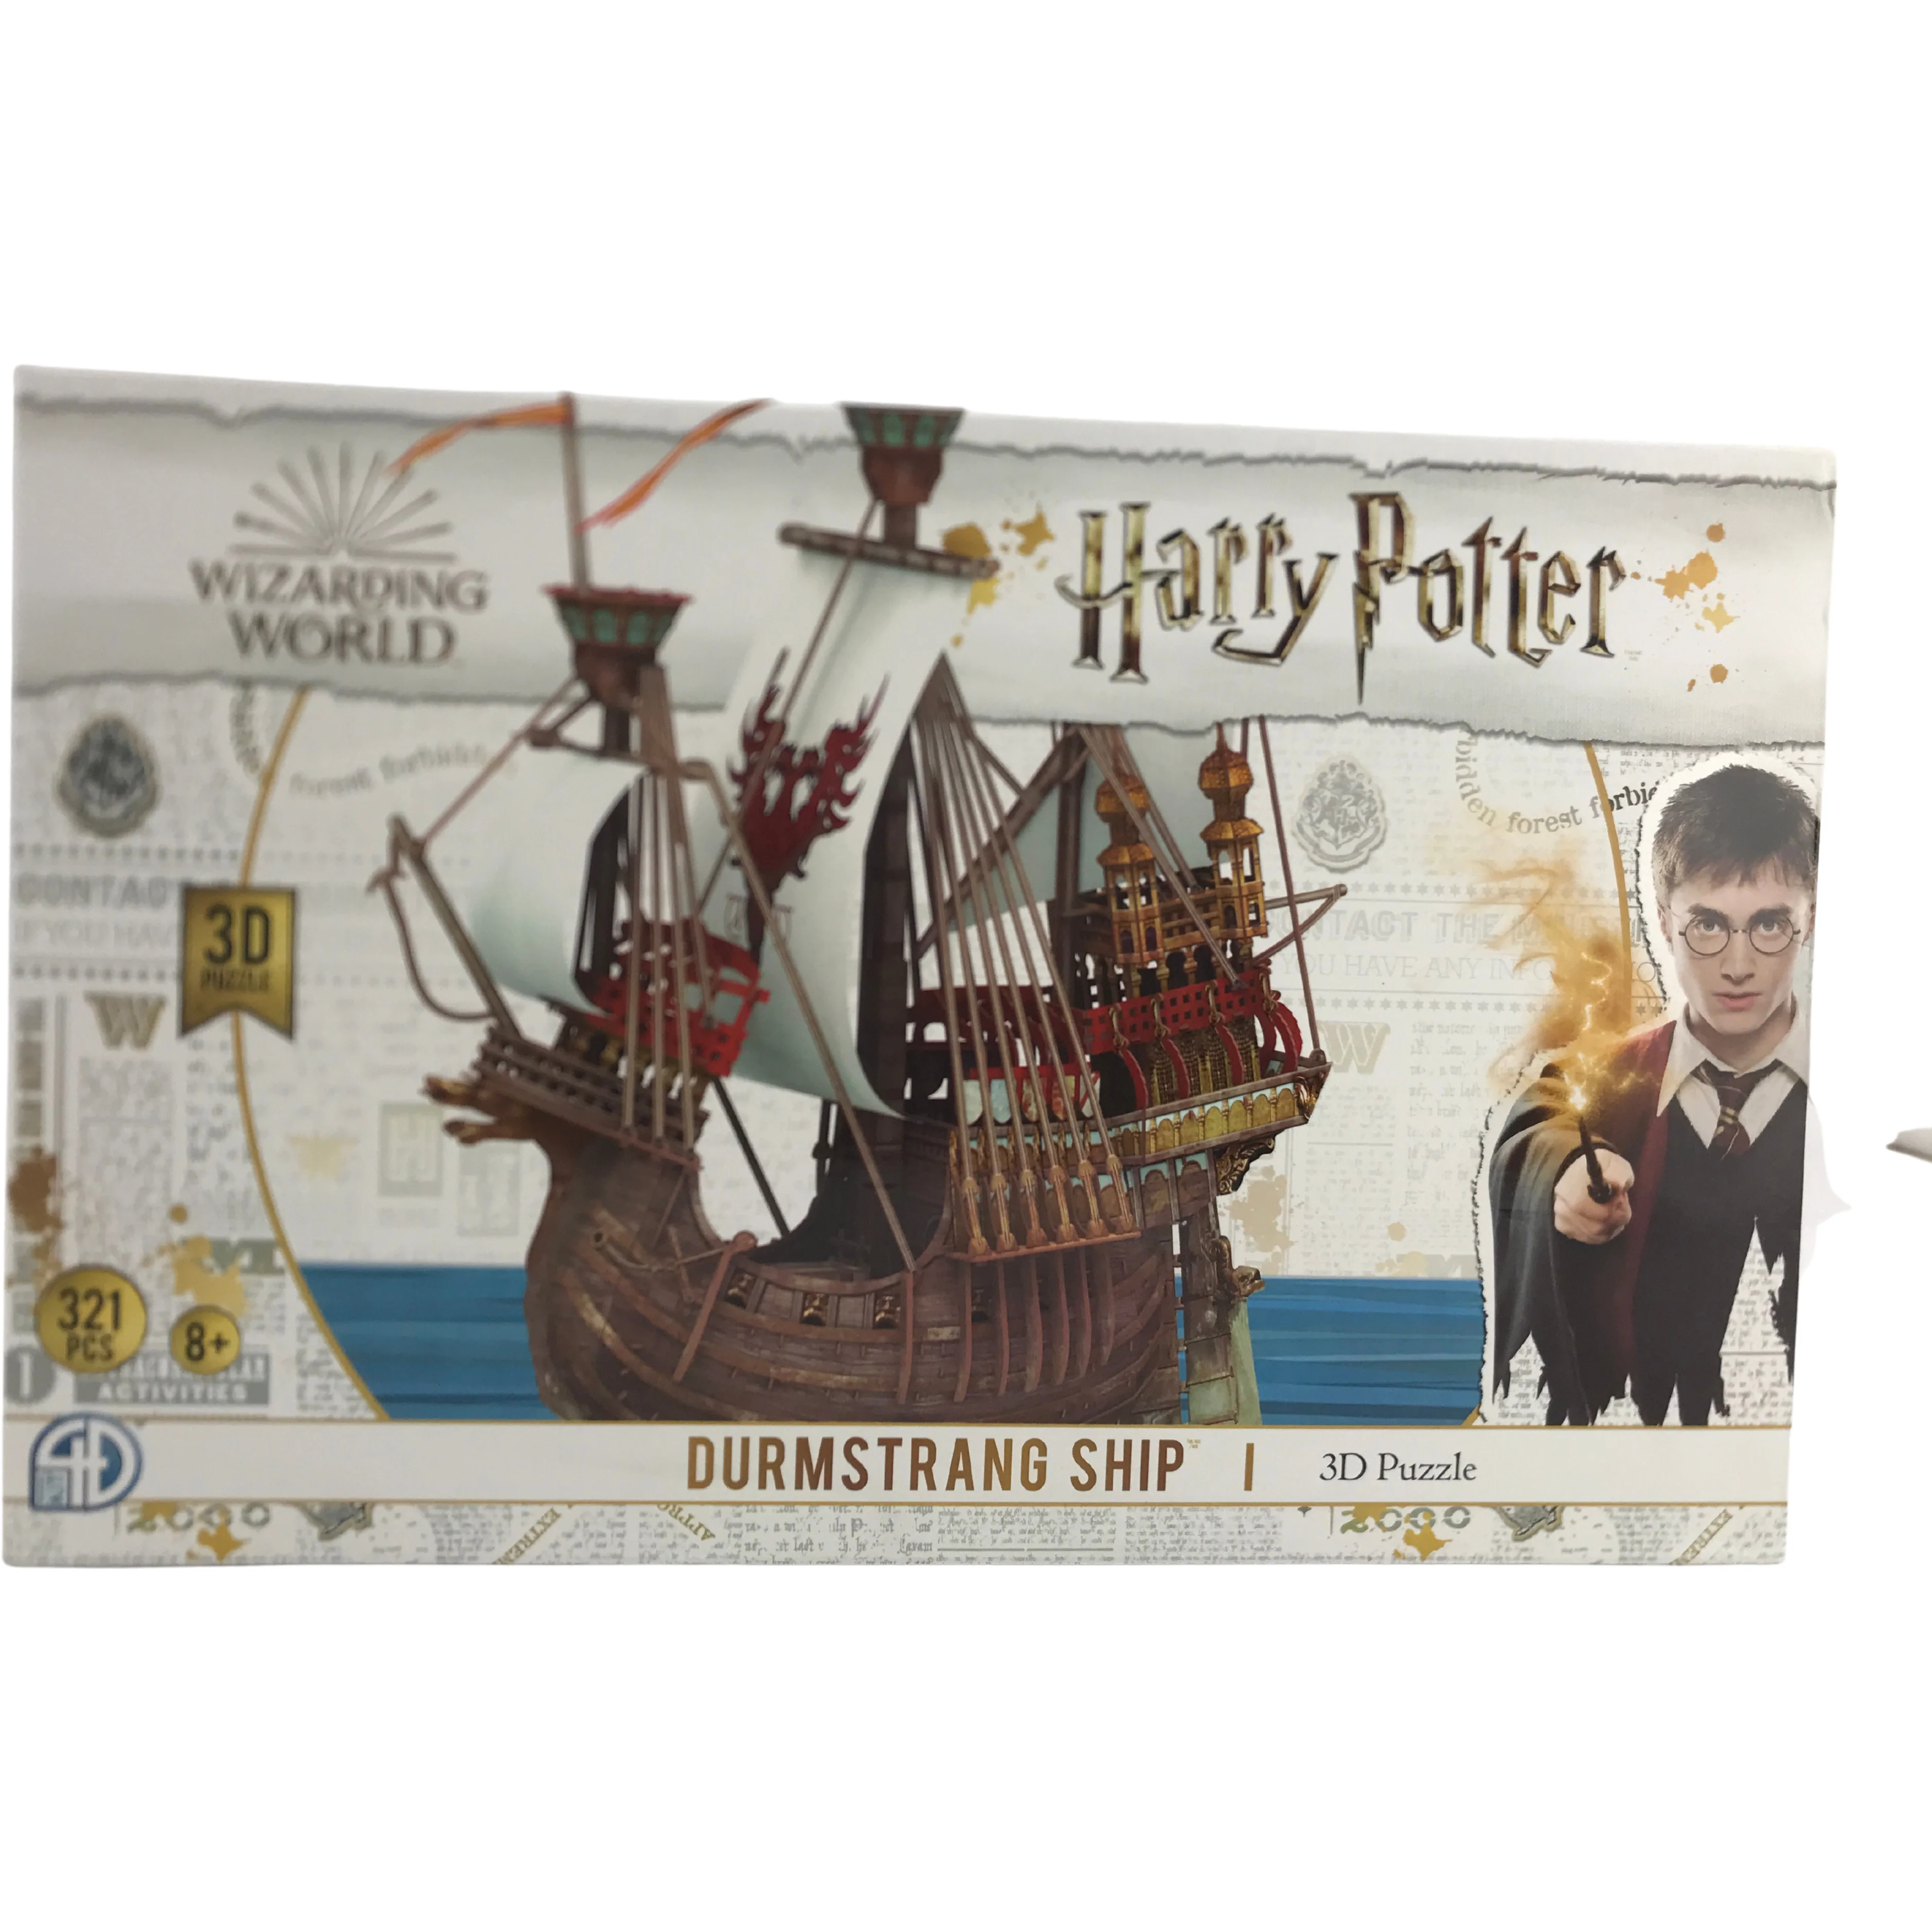 Harry Potter 3D Puzzle: DurmStrang Ship / 3D Puzzle / Wizarding World